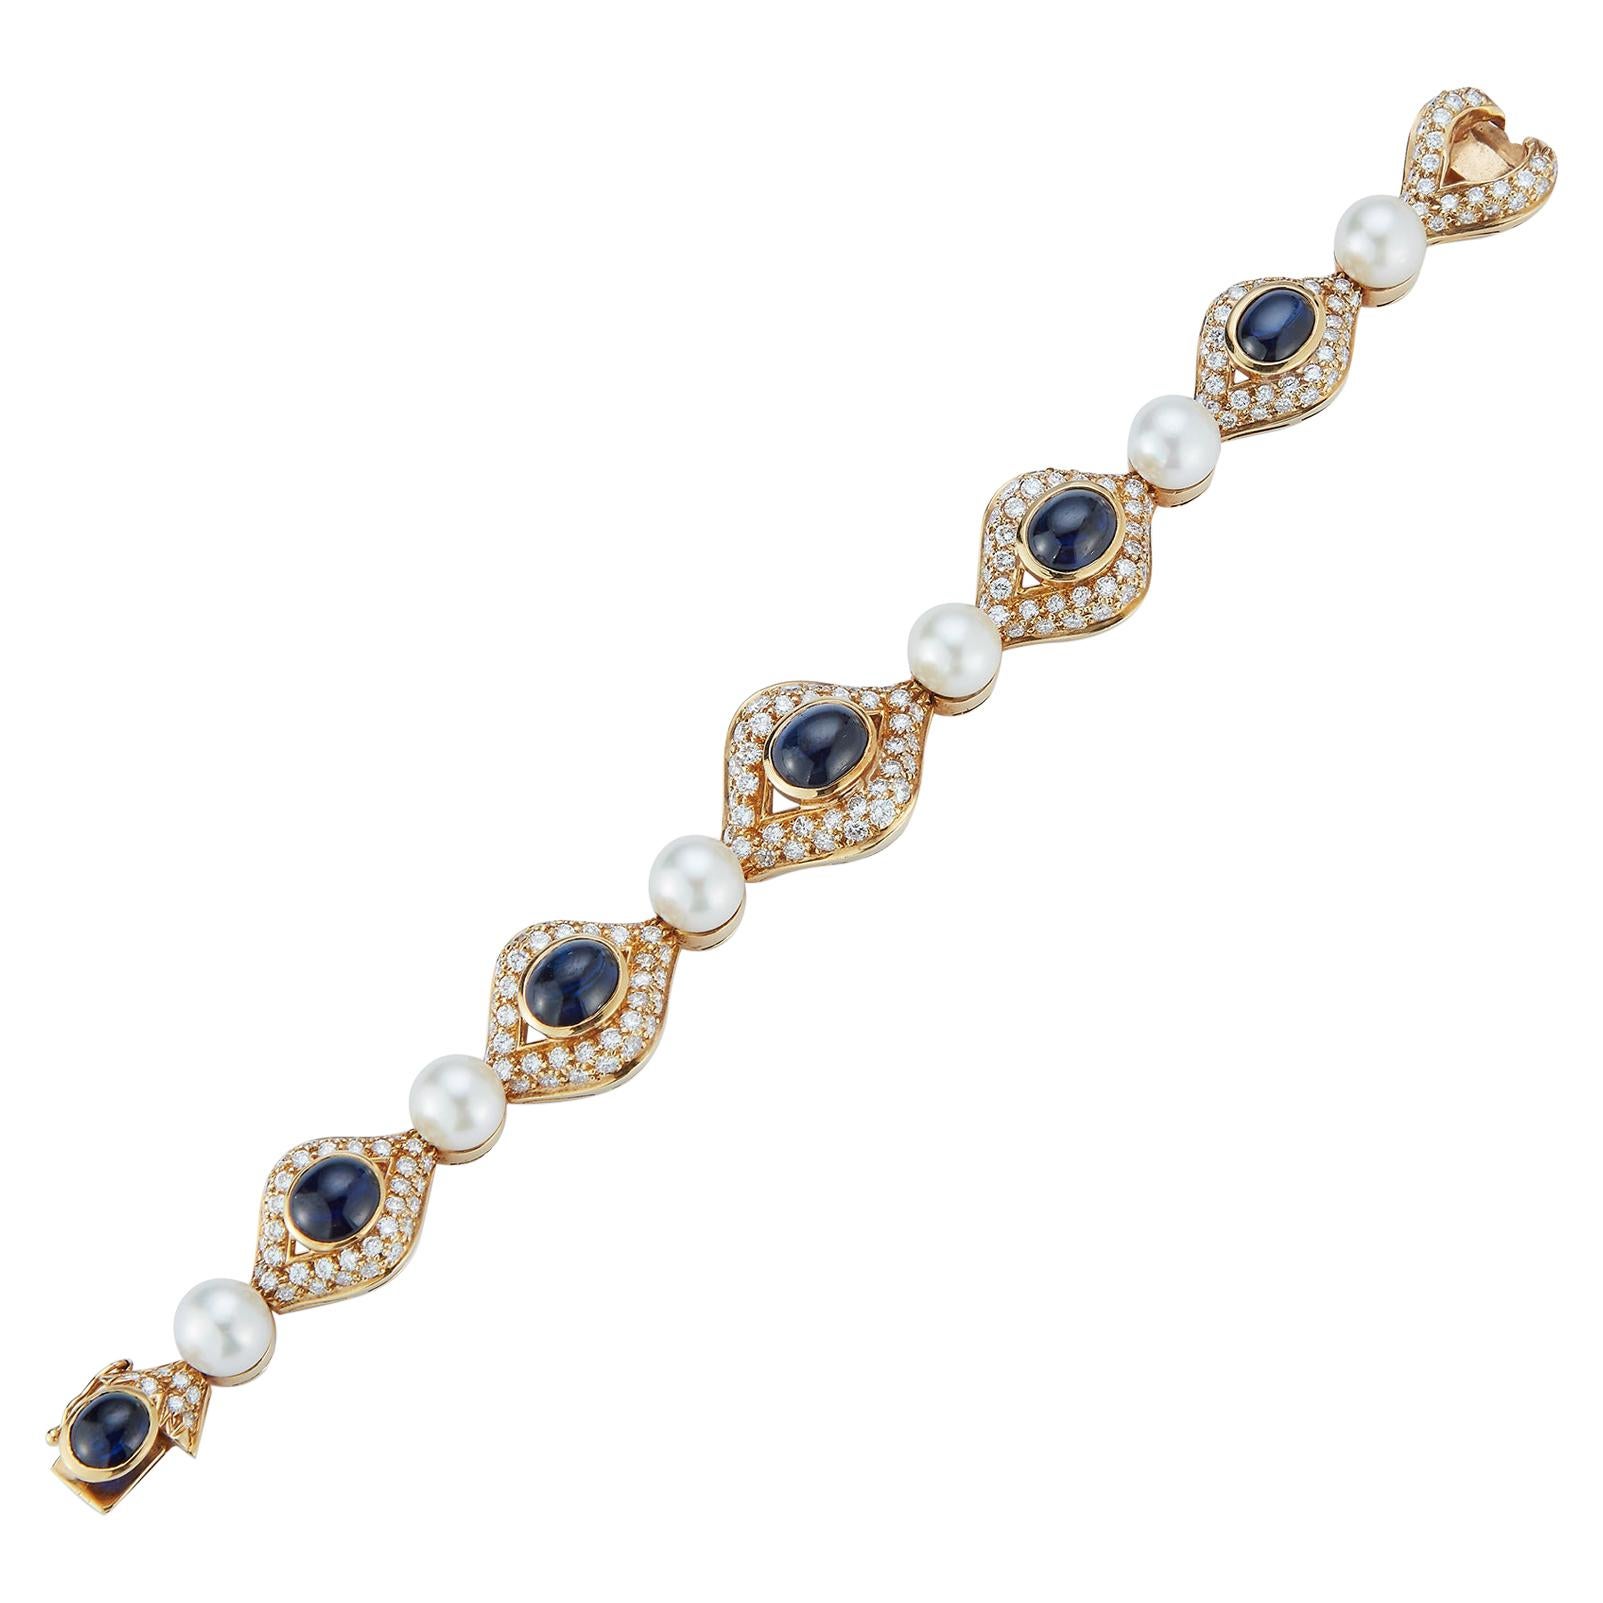 Pearl, Sapphire and Diamond Bracelet